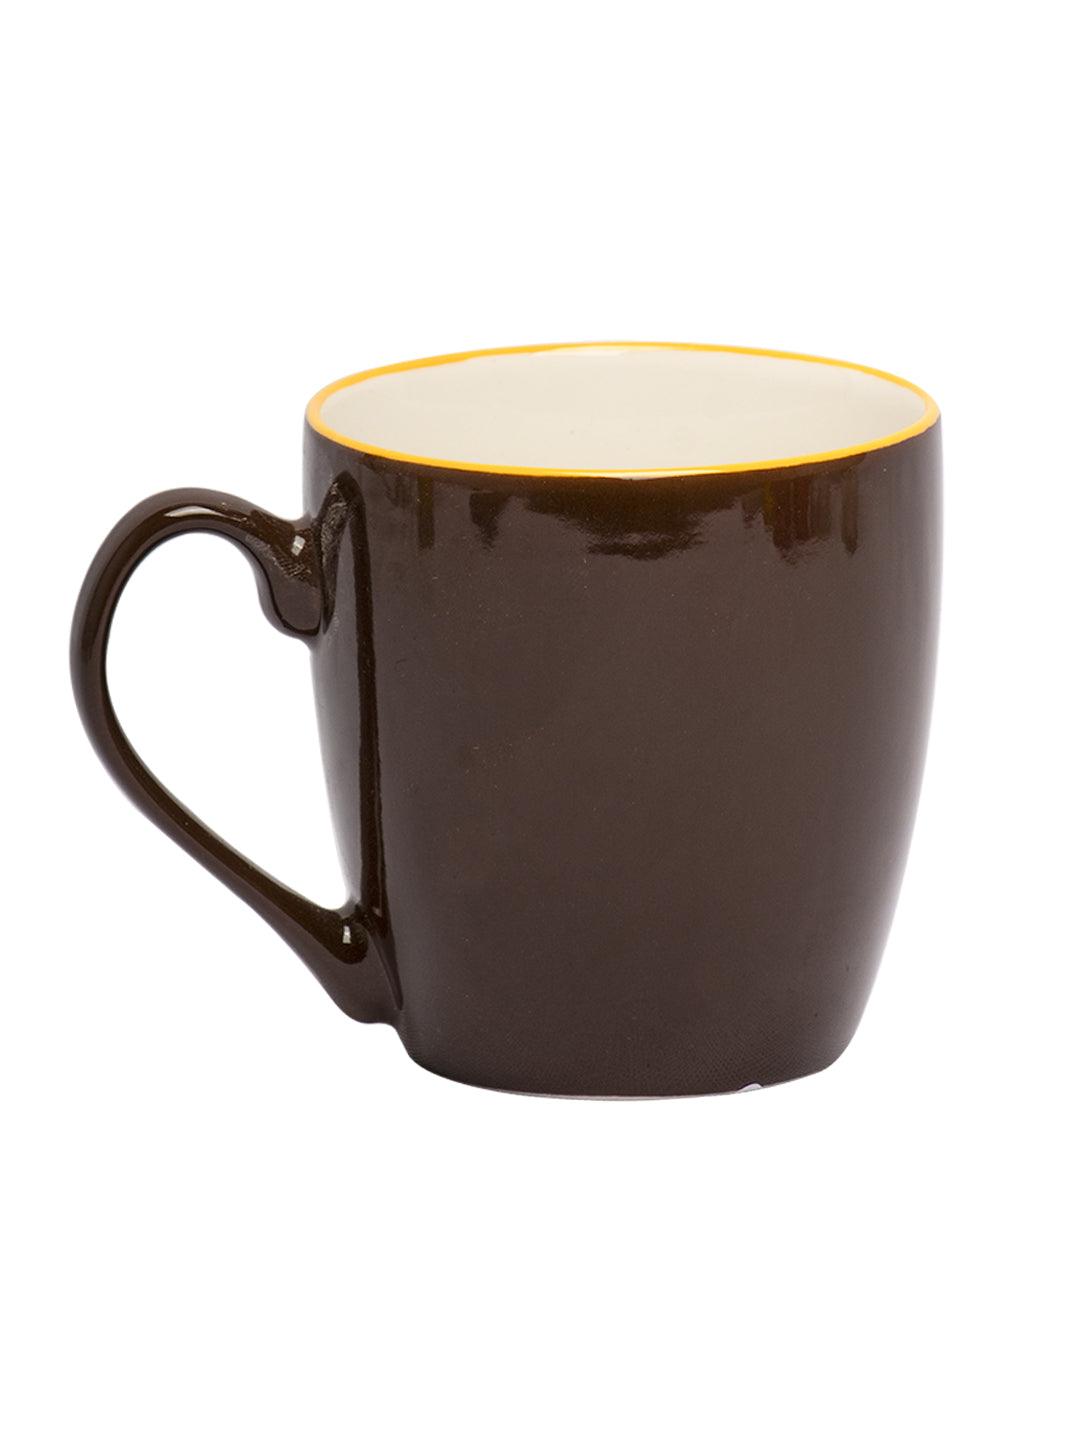 Start Every Day With Good Coffee' Mug - MARKET 99